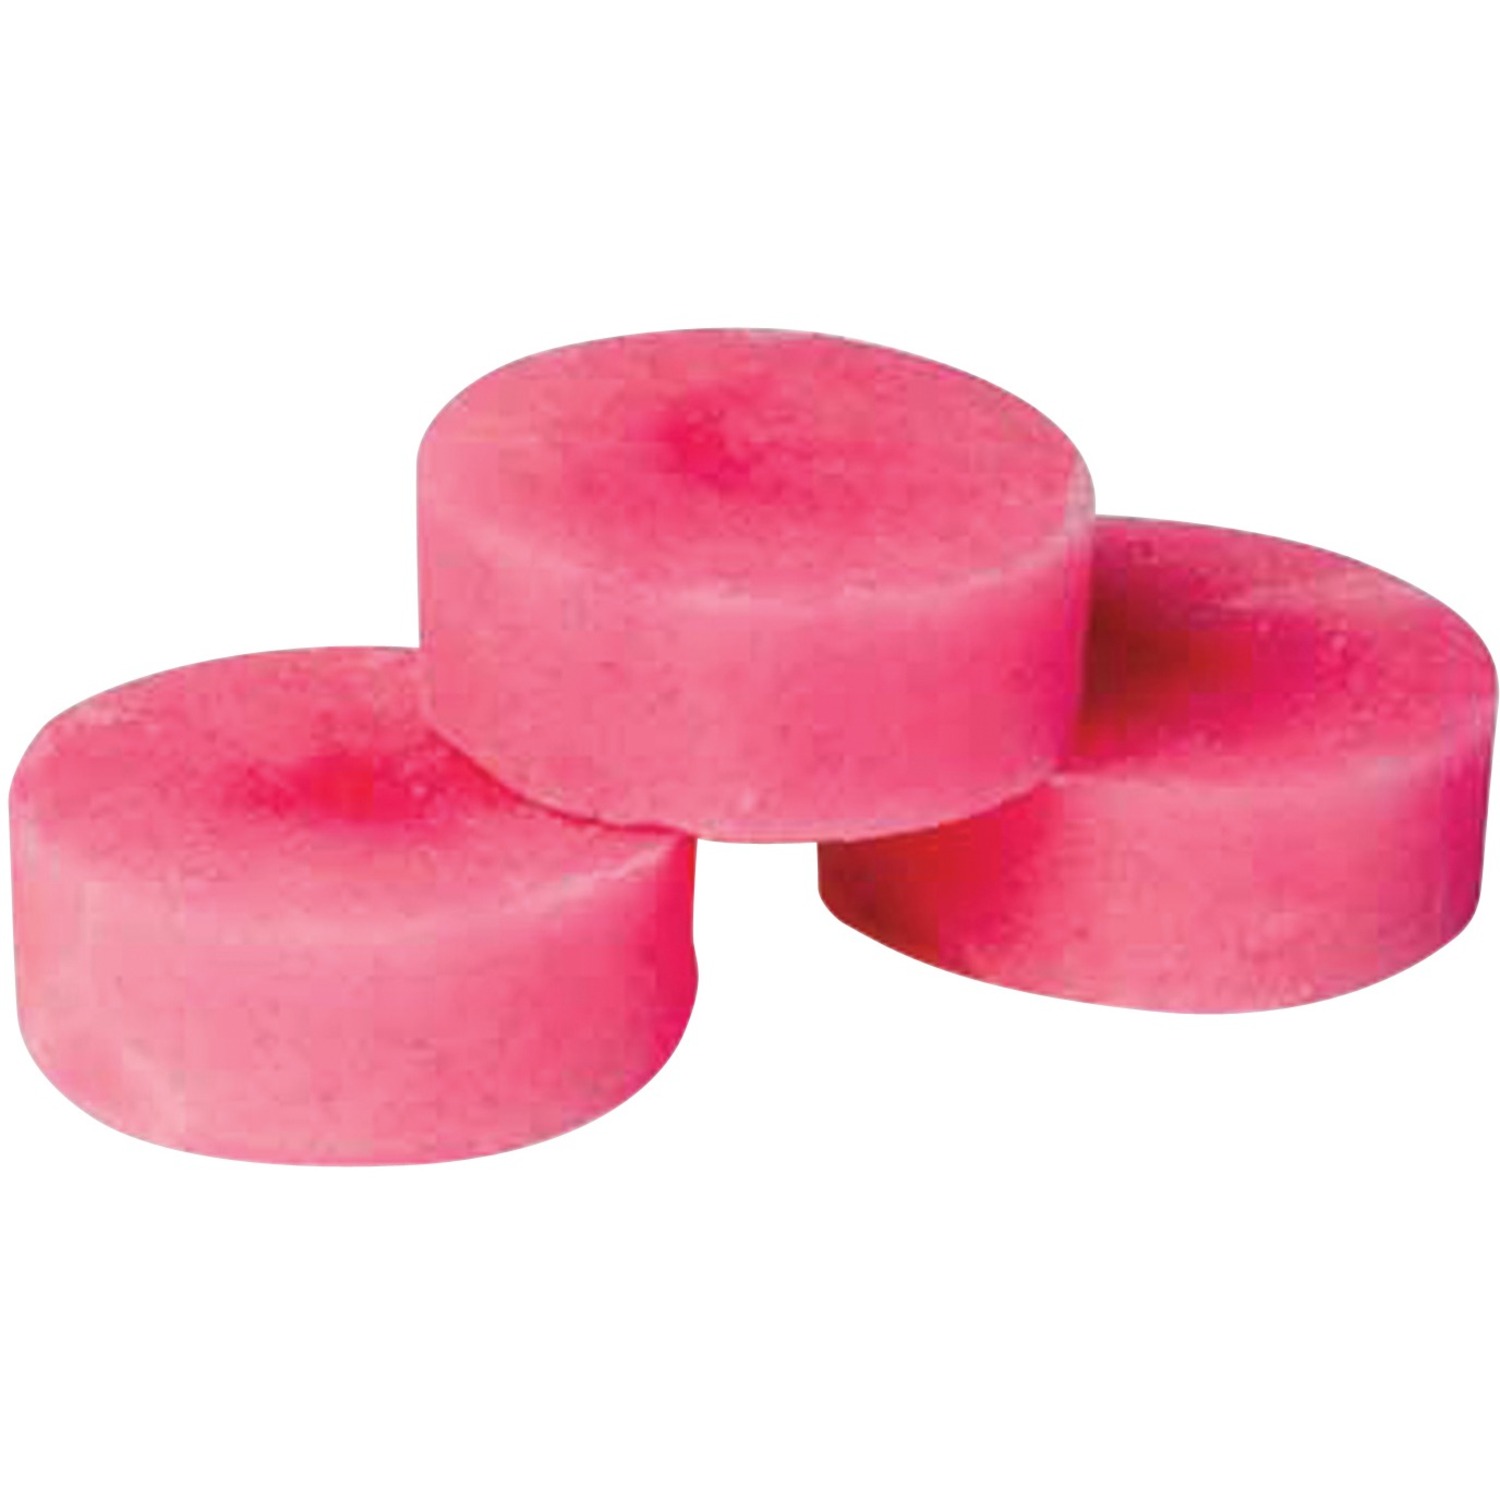 Hospeco Health Gards Para Urinal Toss Block - Para Deodorizer - Pink - 12 / Pack